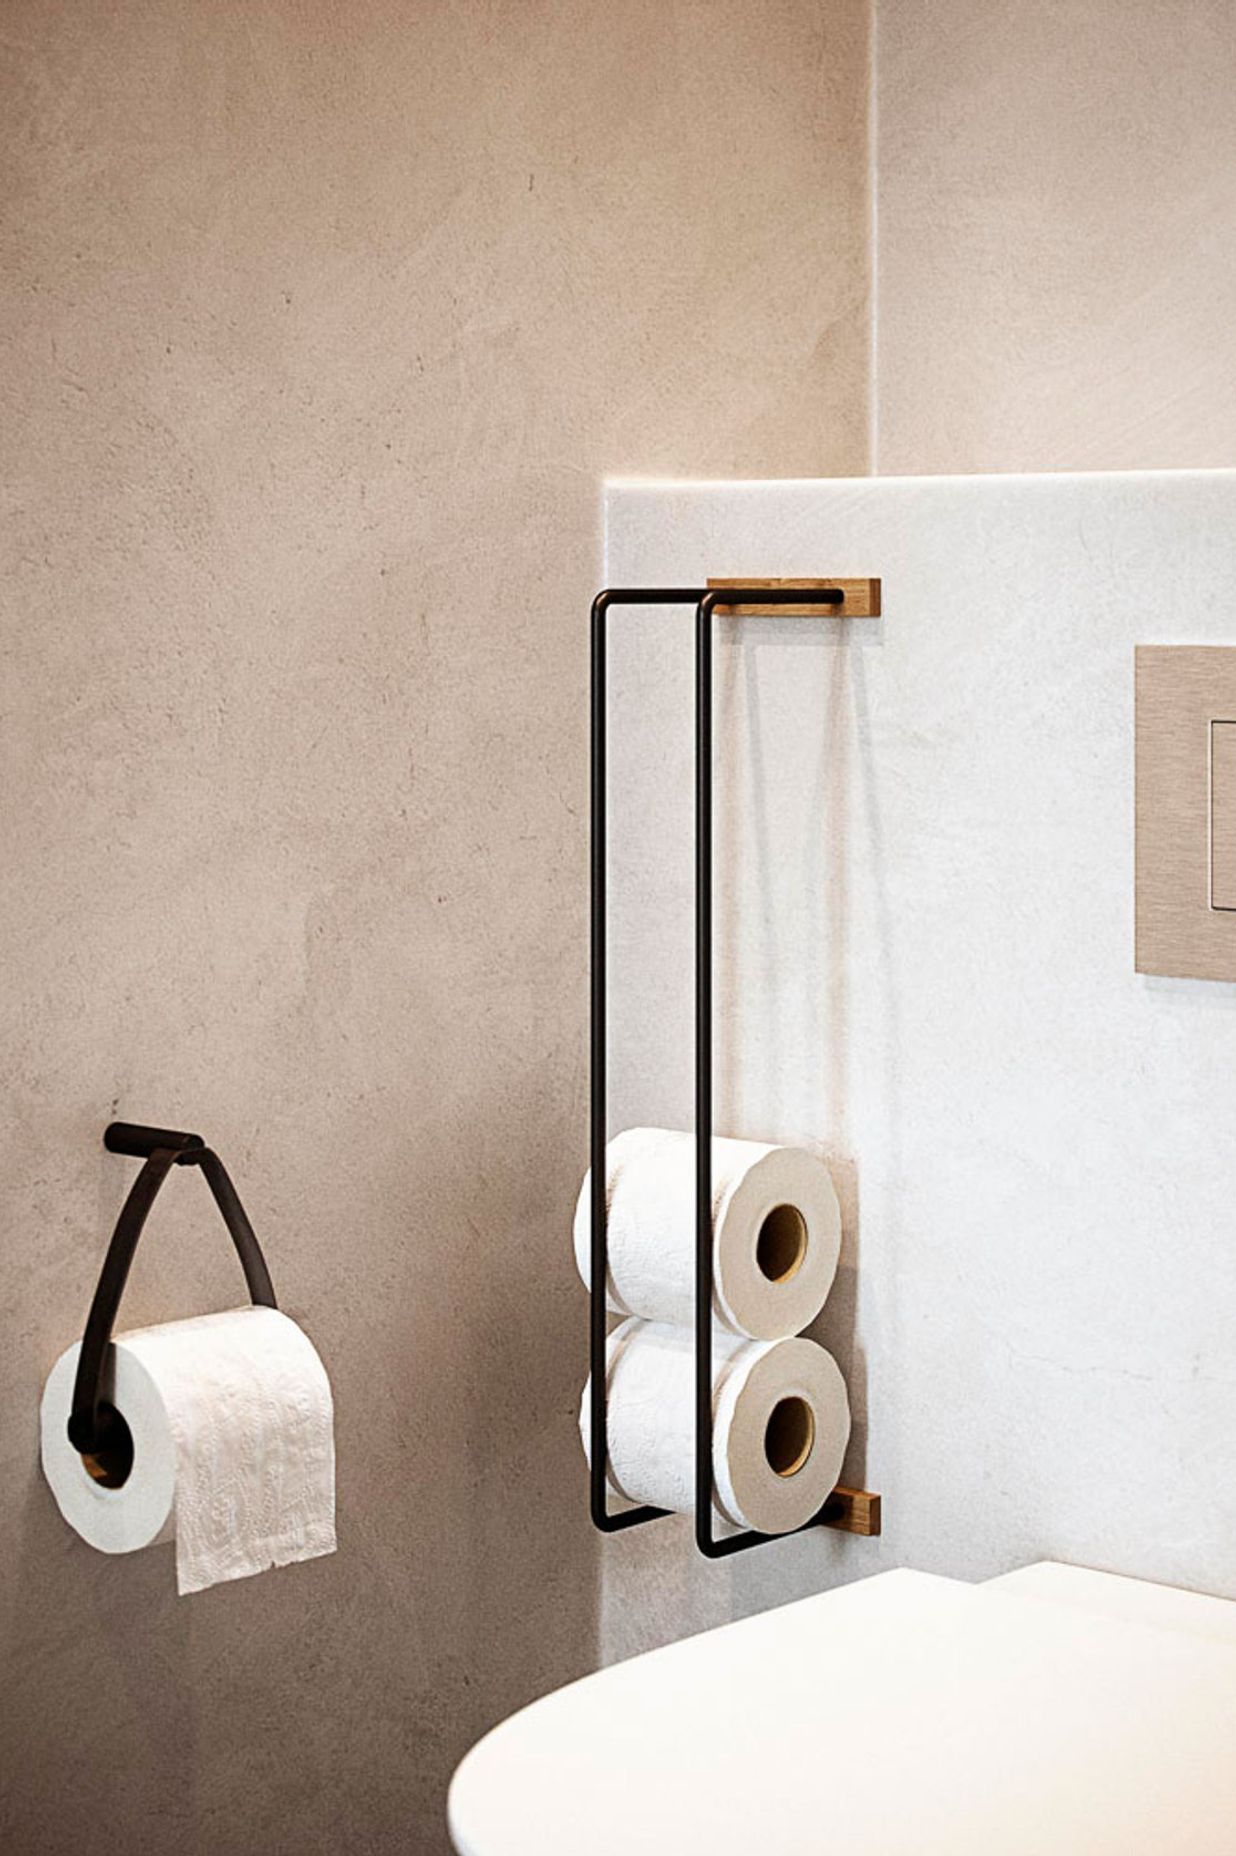 Designstuff - Bathroom Hand Towel and Toilet Roll Rack